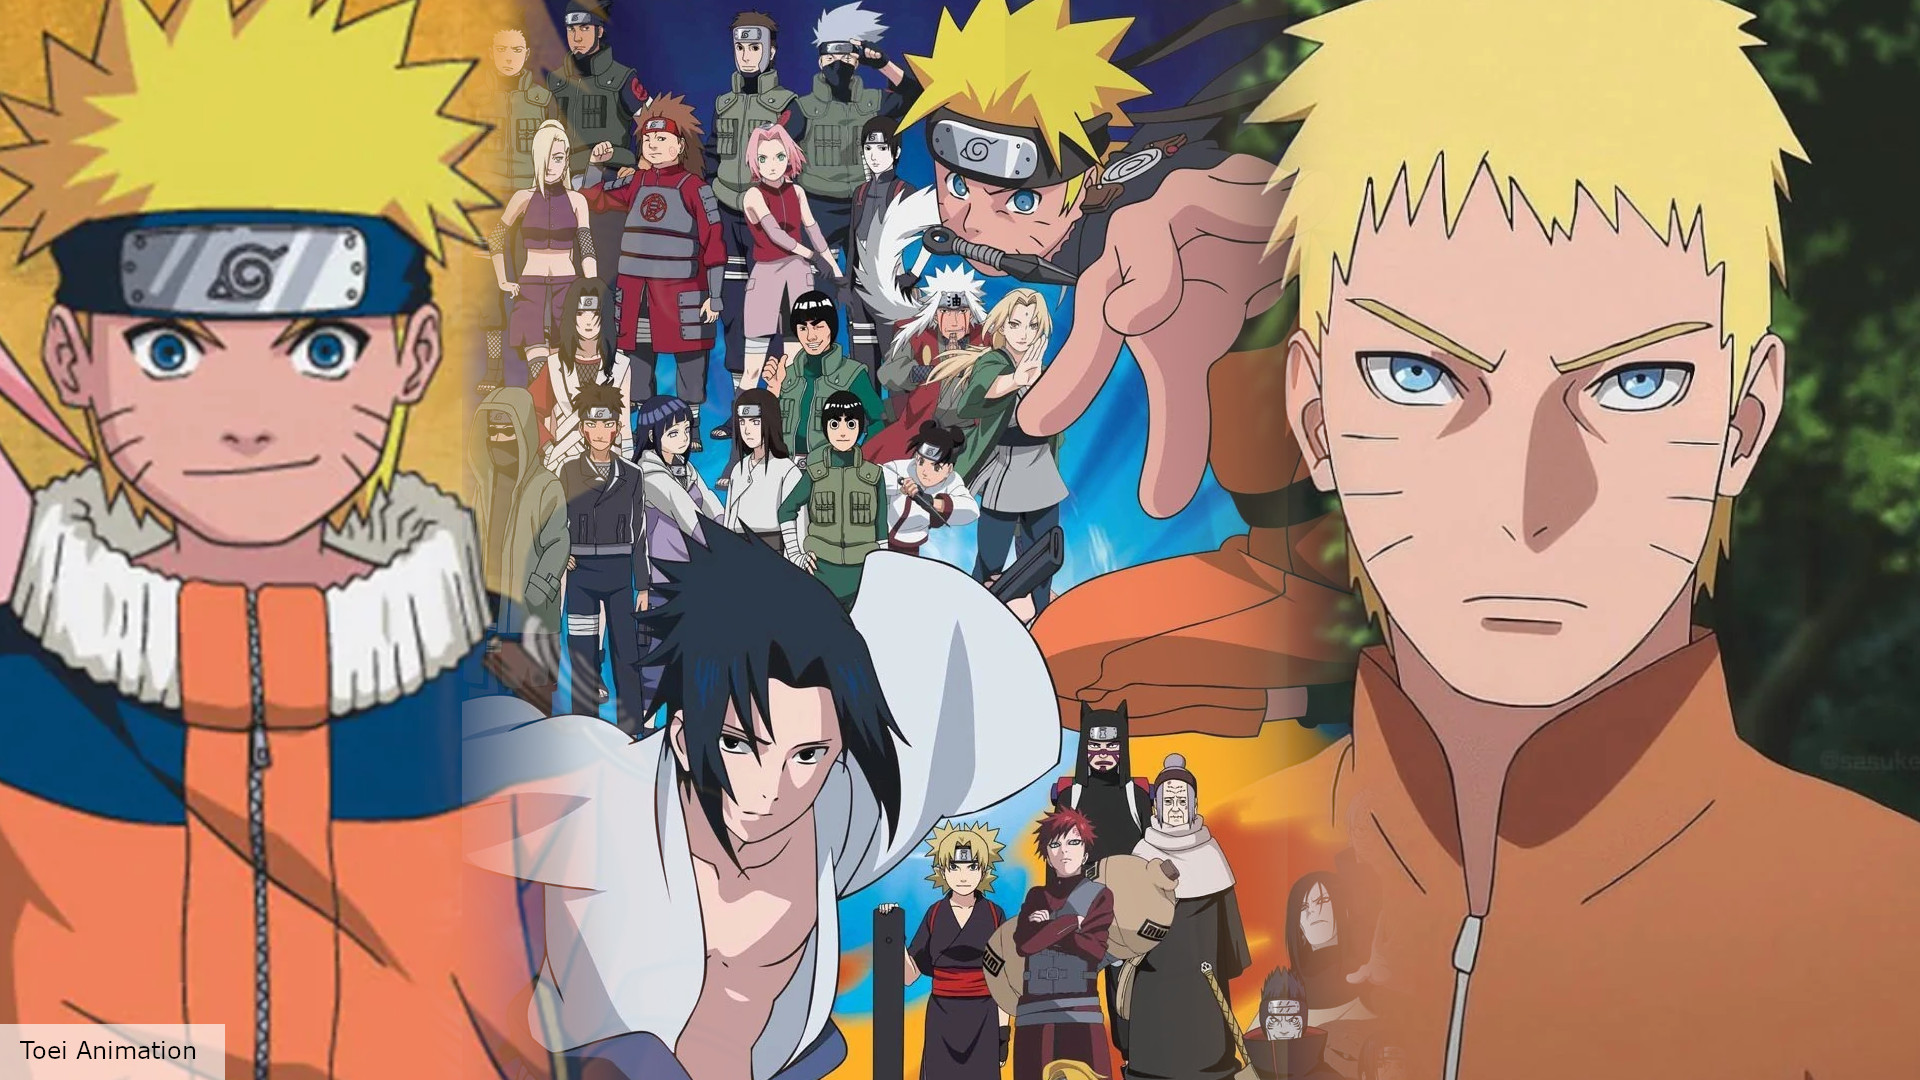 The Last Naruto The Movie & Naruto: Road to Ninja Added to Netflix UK